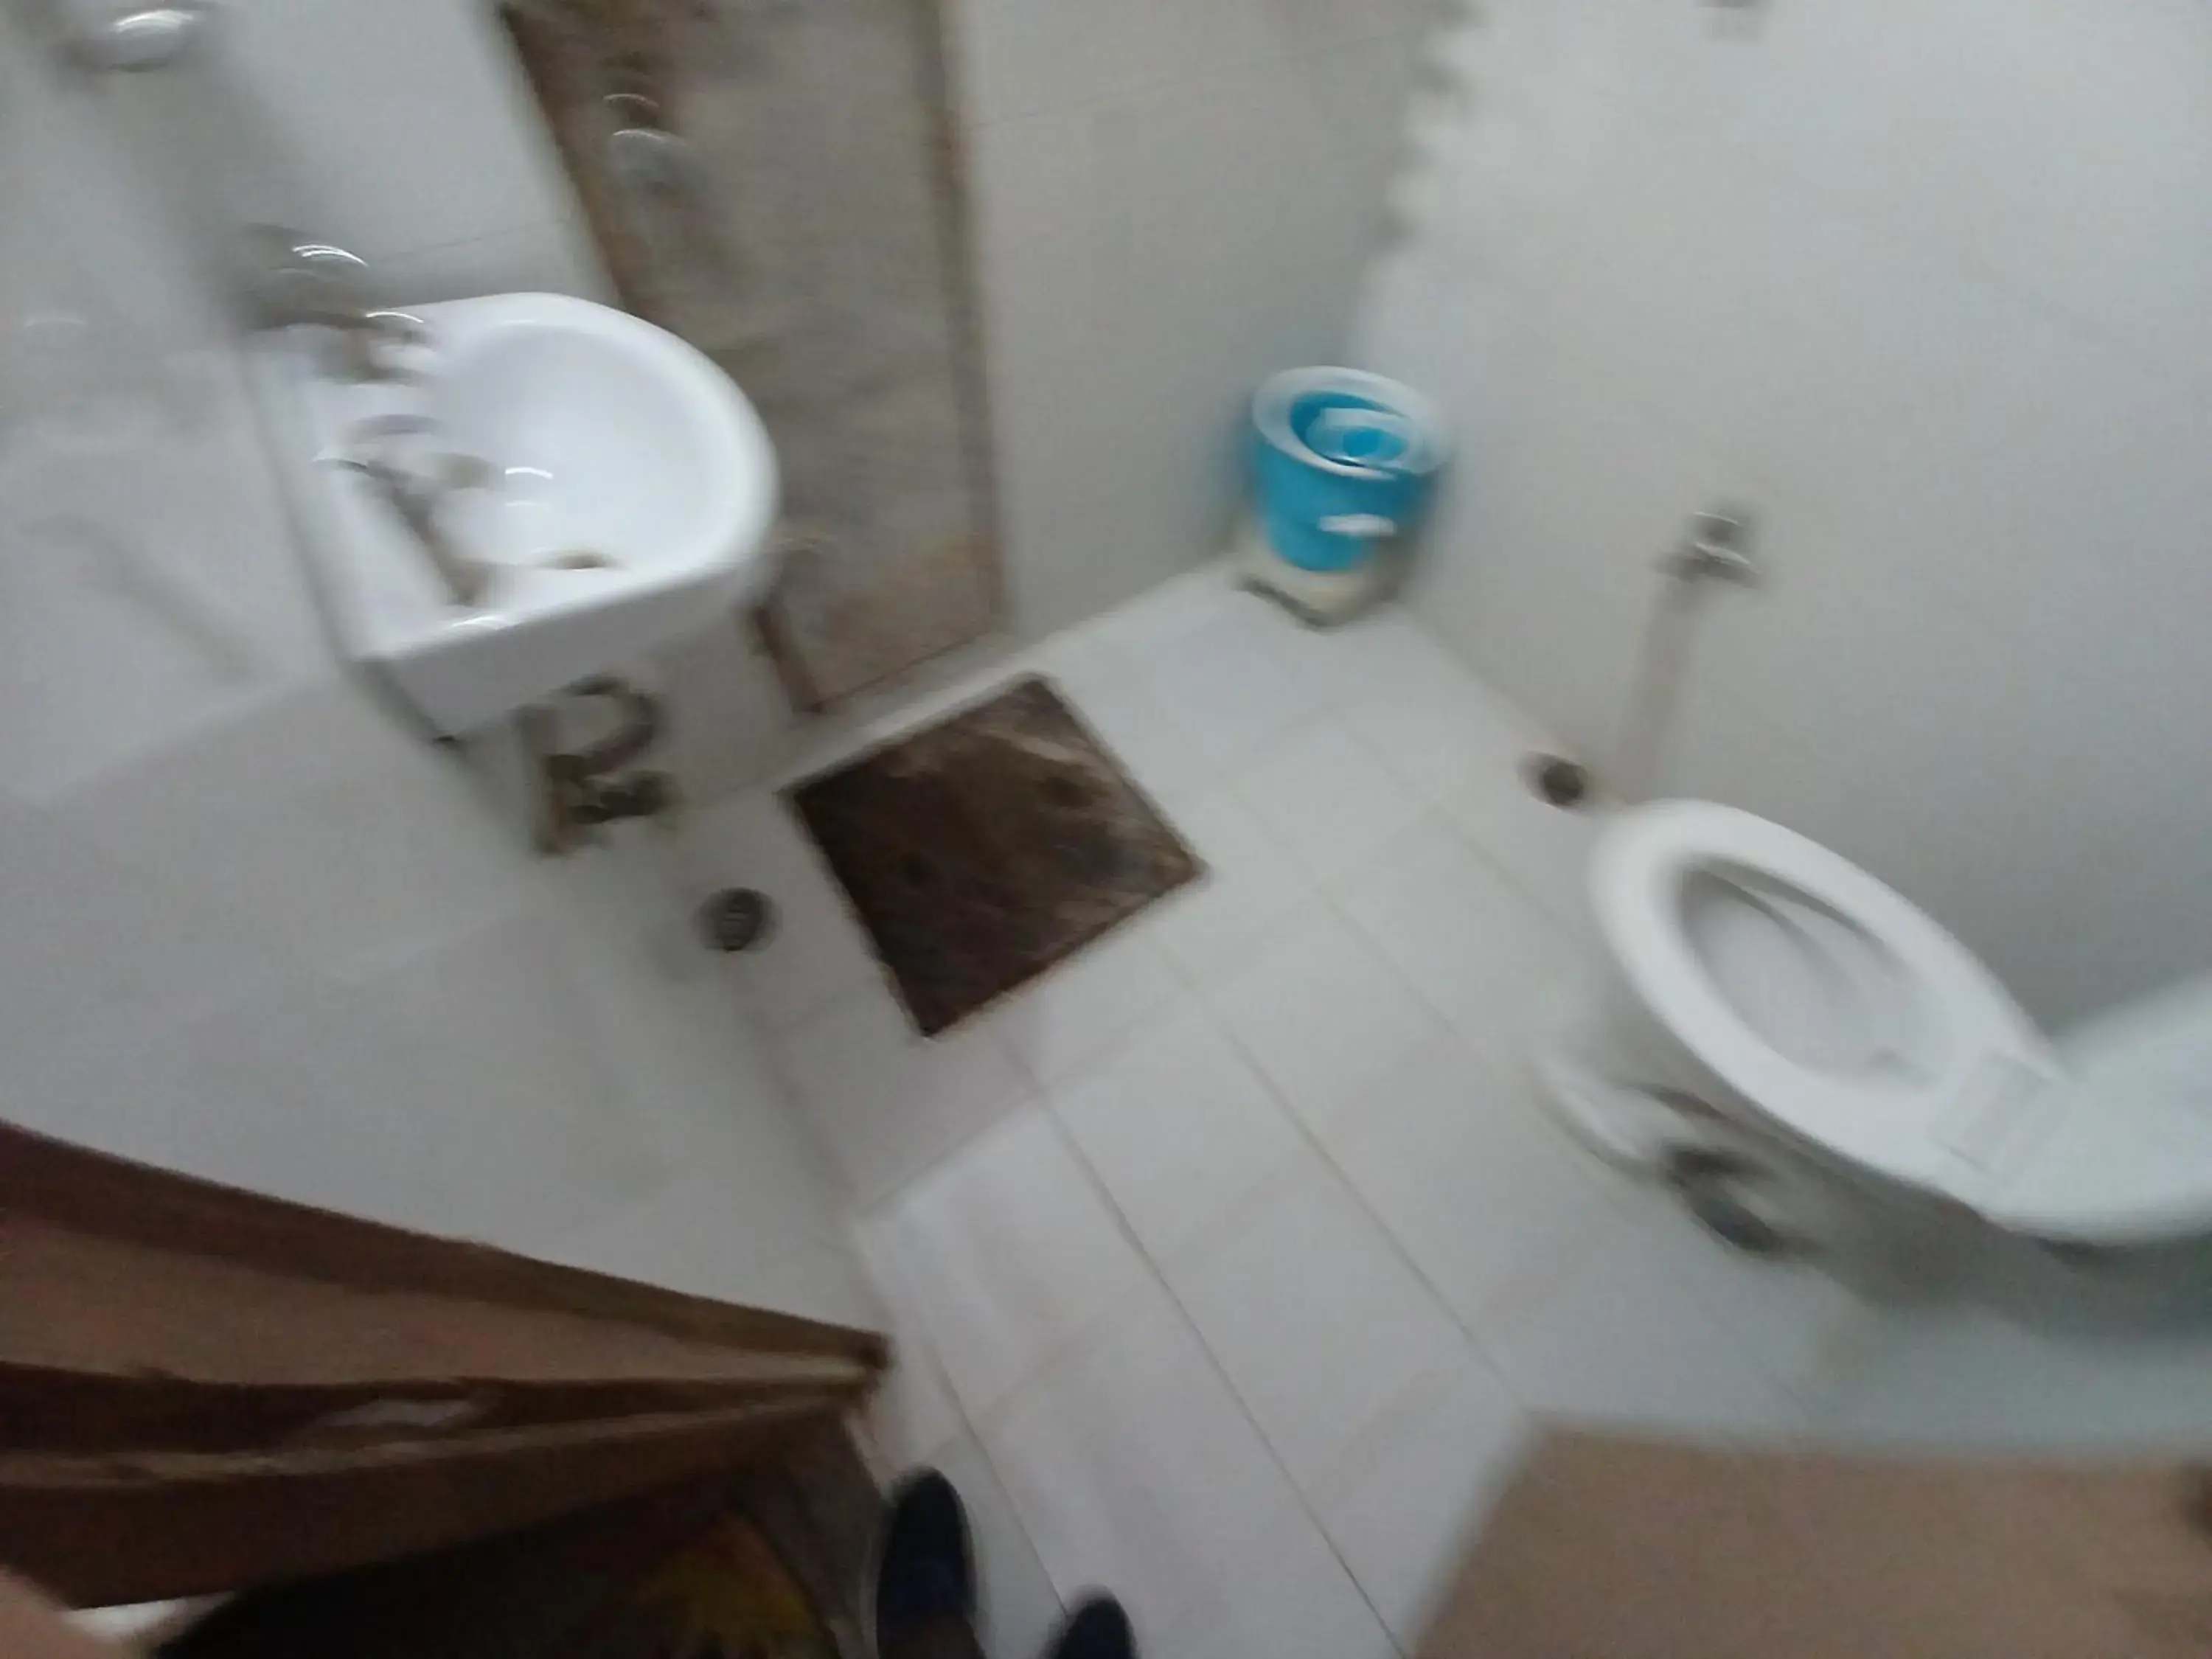 Bathroom in Kailash Hotel